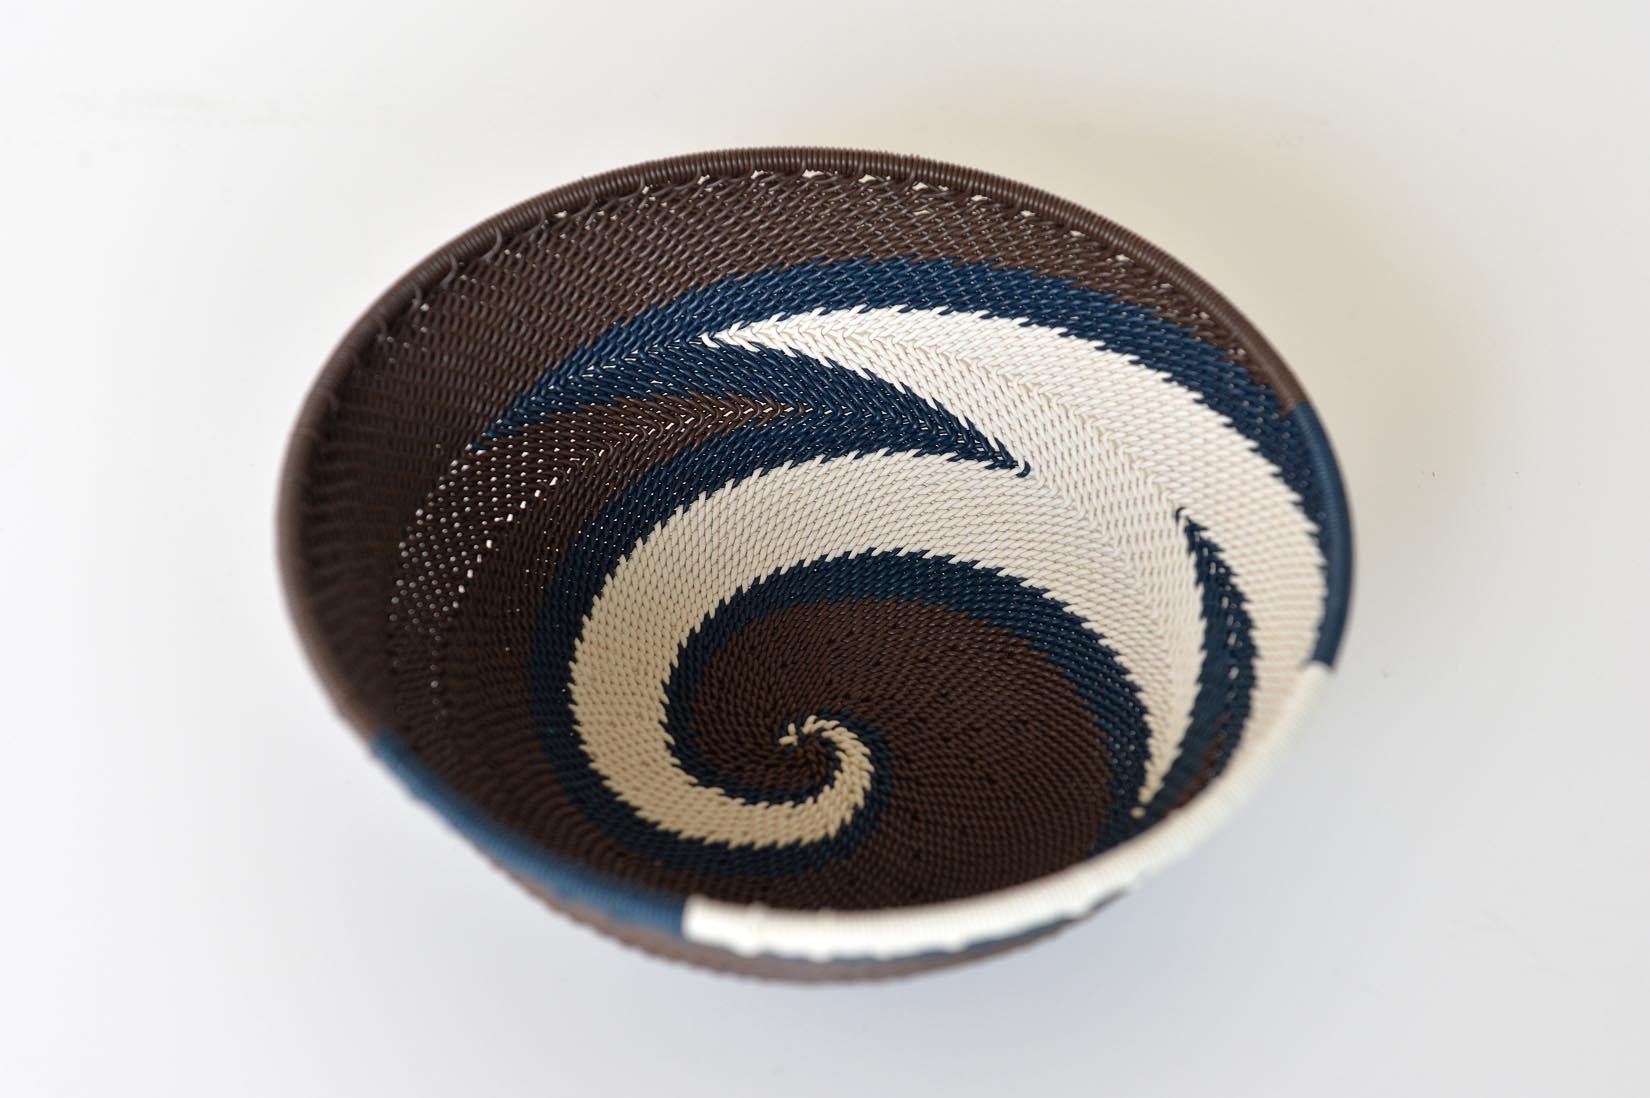 Zulu basket bowl - Brown, blue & white - Natalia Willmott